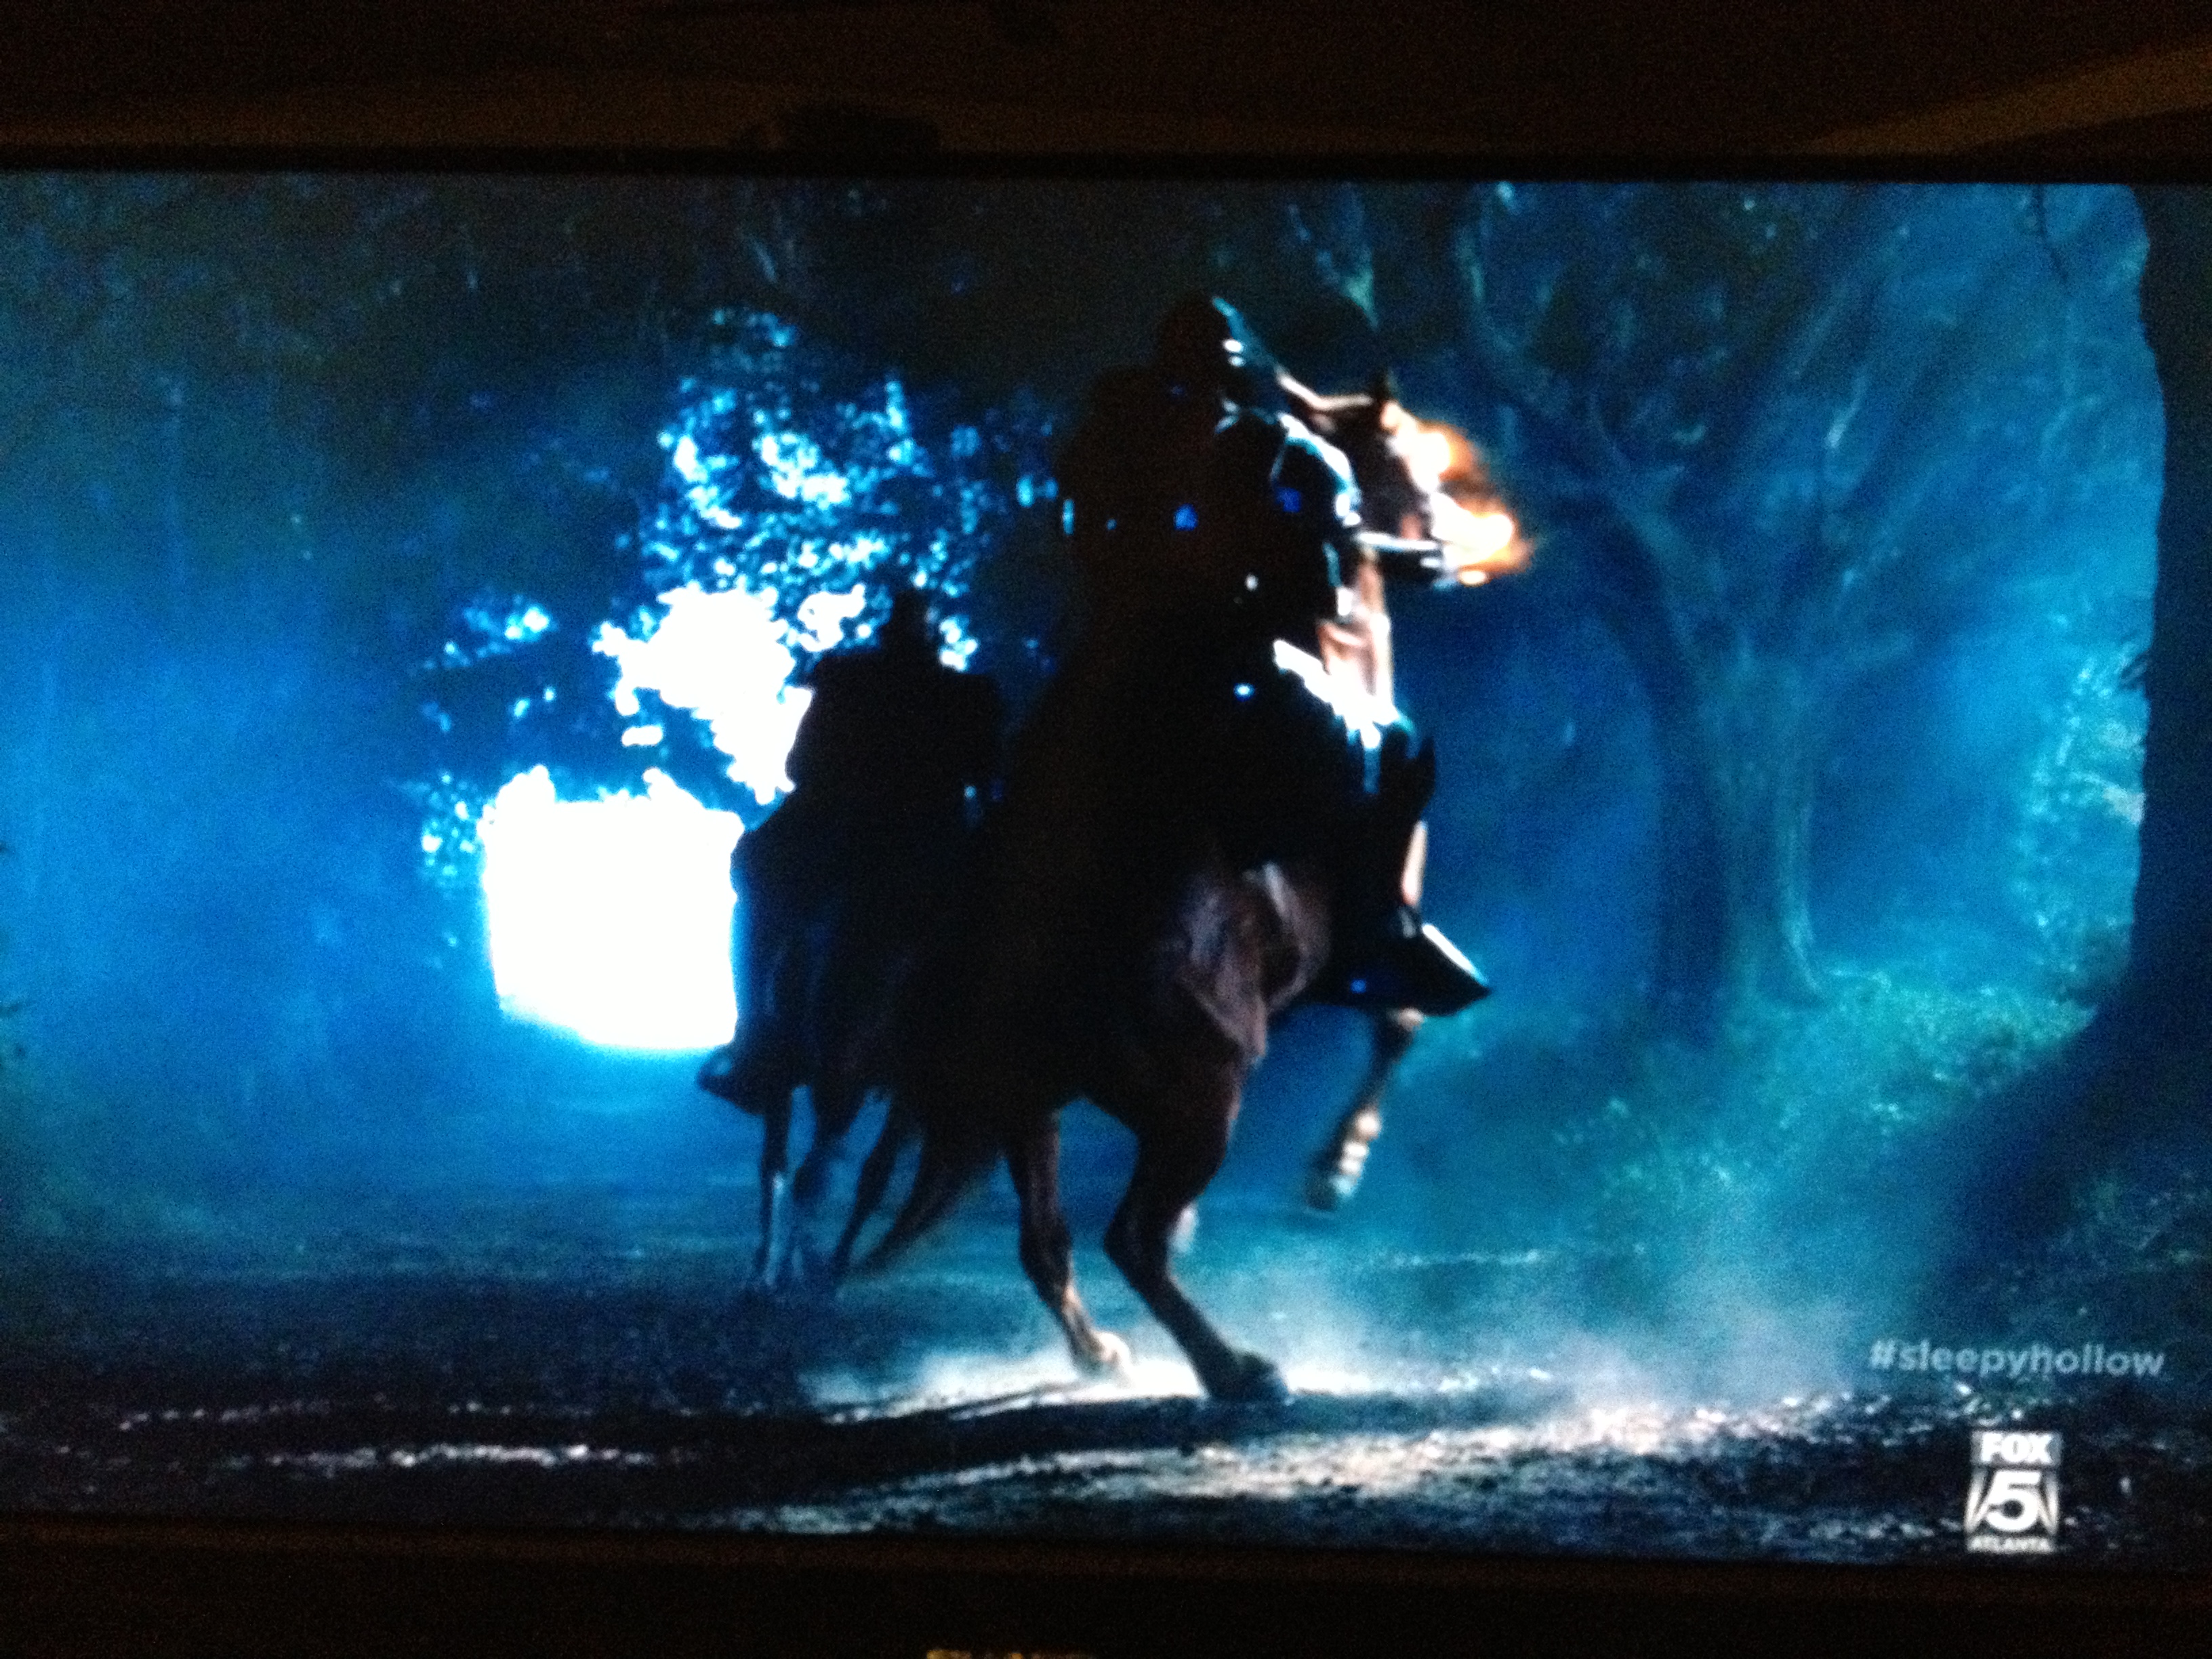 Ed riding as War in Sleepy Hollow season 2 episode 2